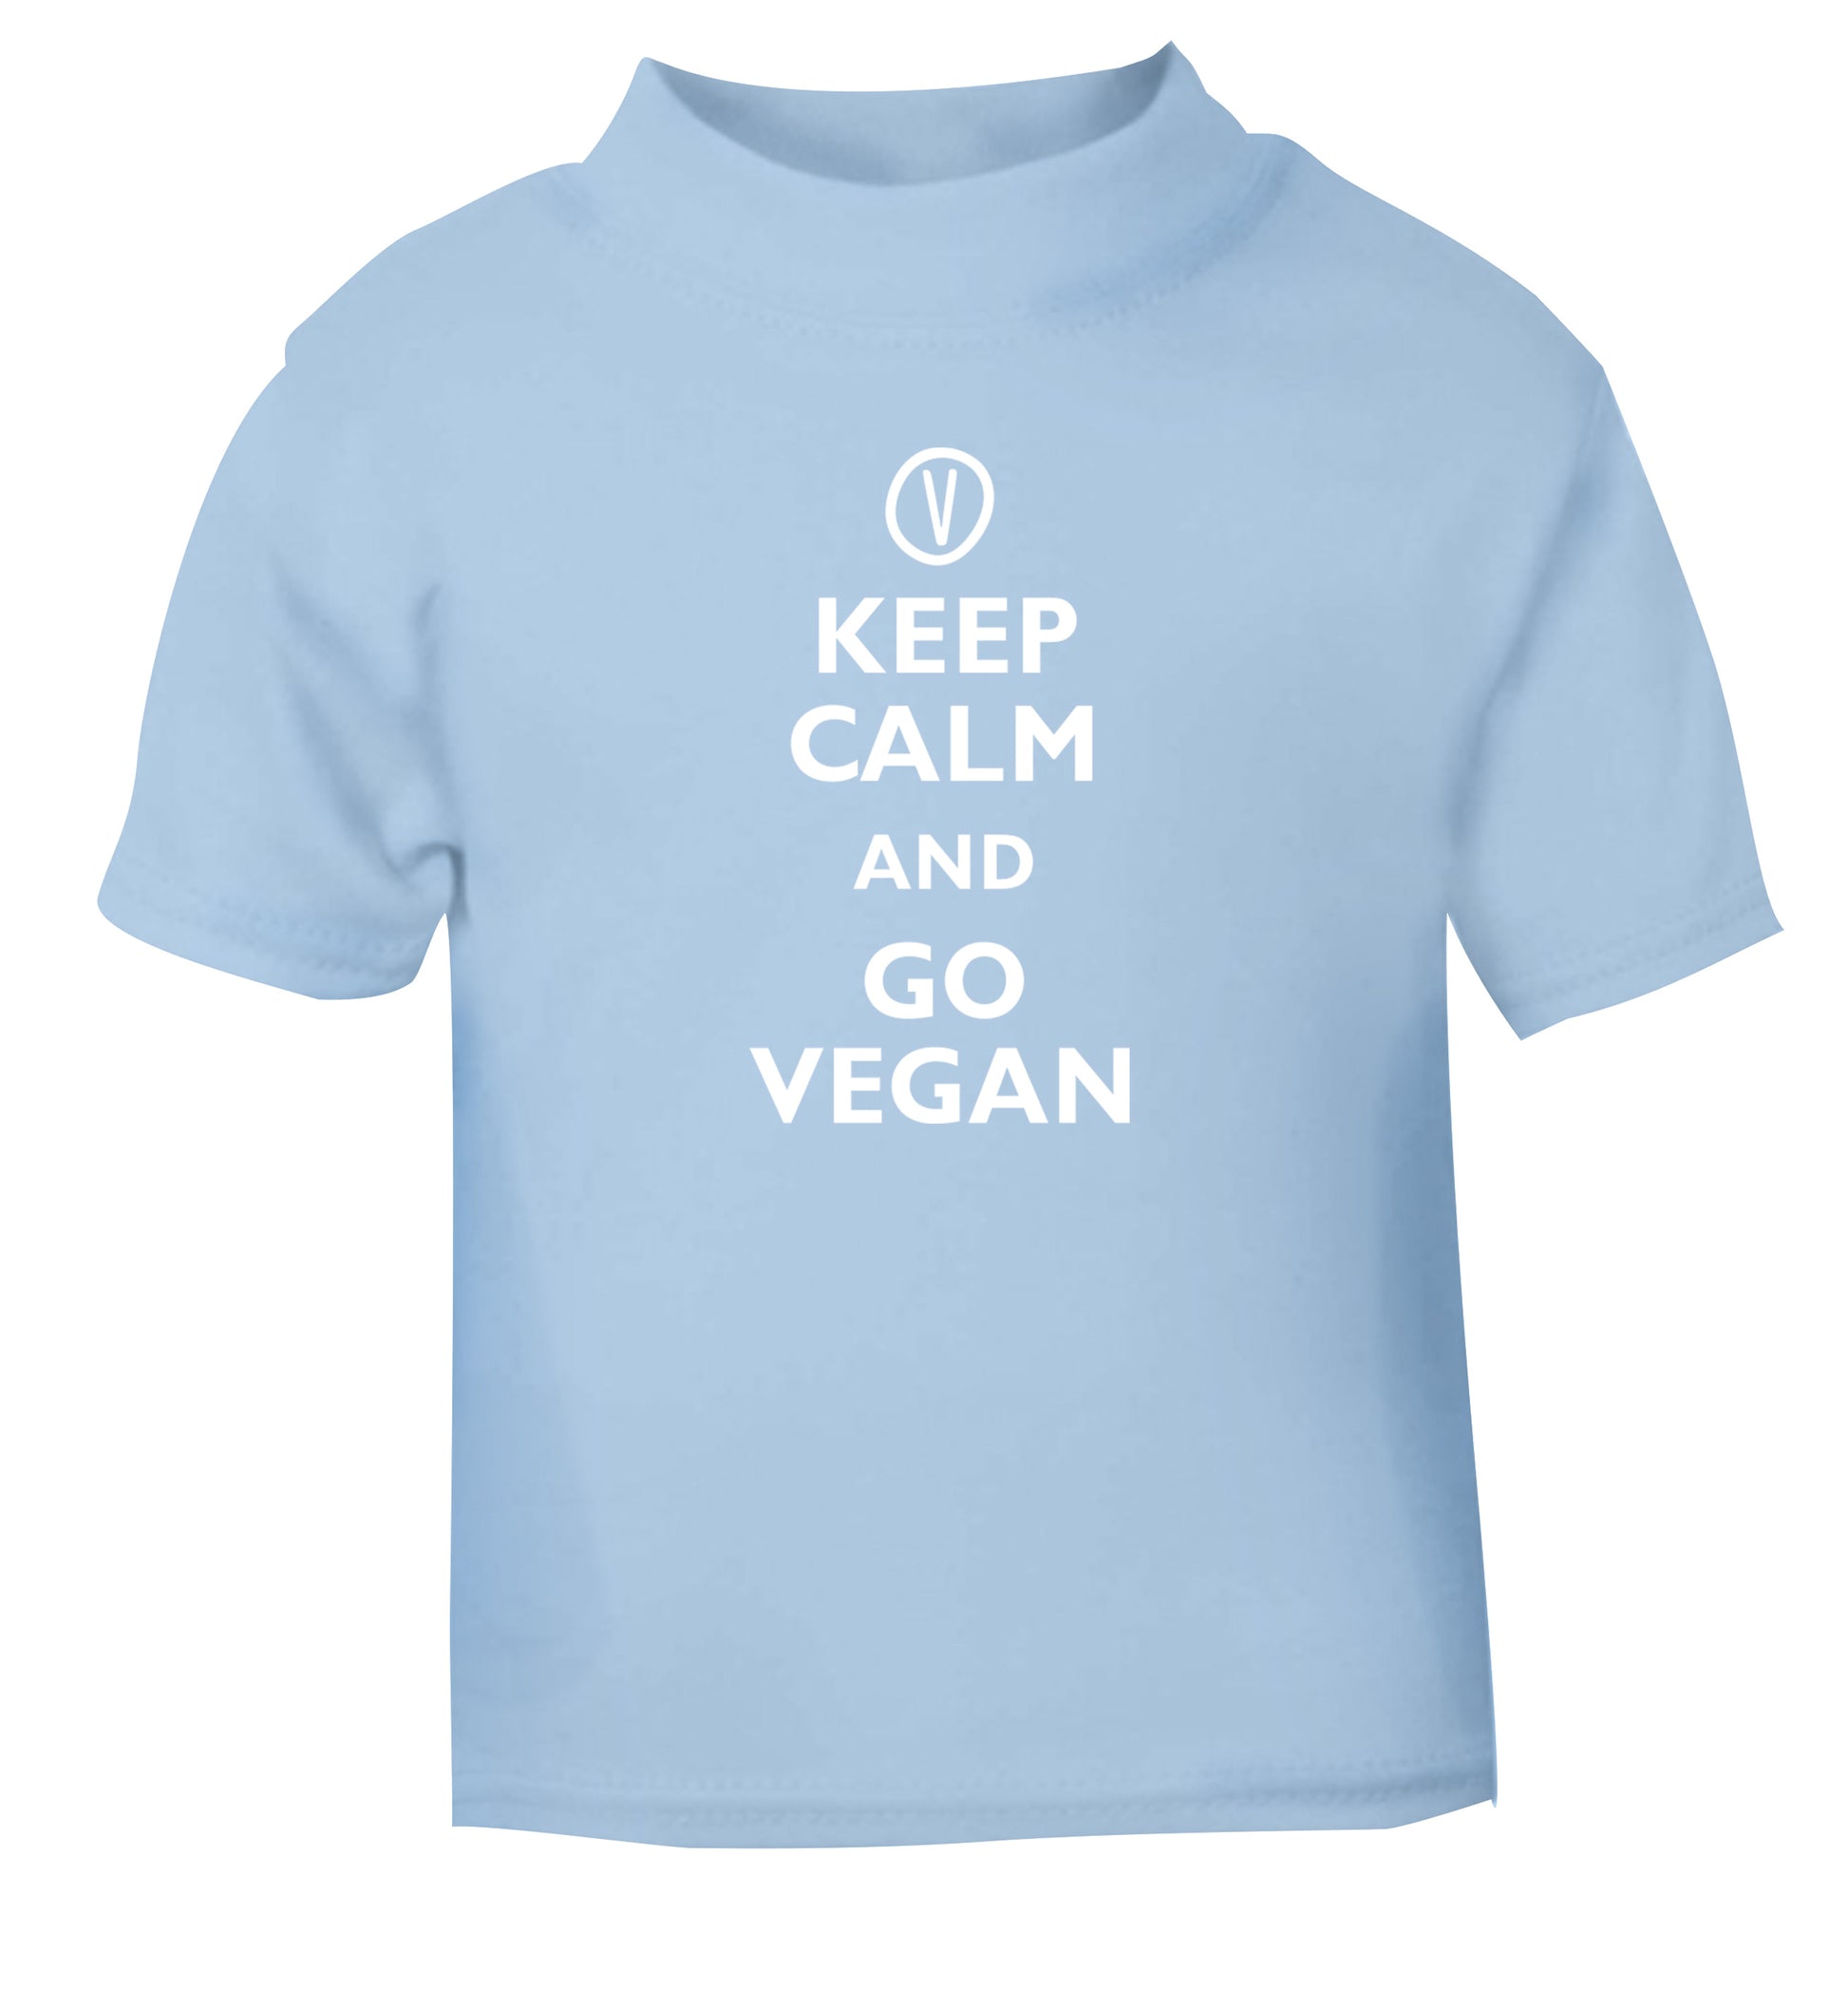 Keep calm and go vegan light blue Baby Toddler Tshirt 2 Years